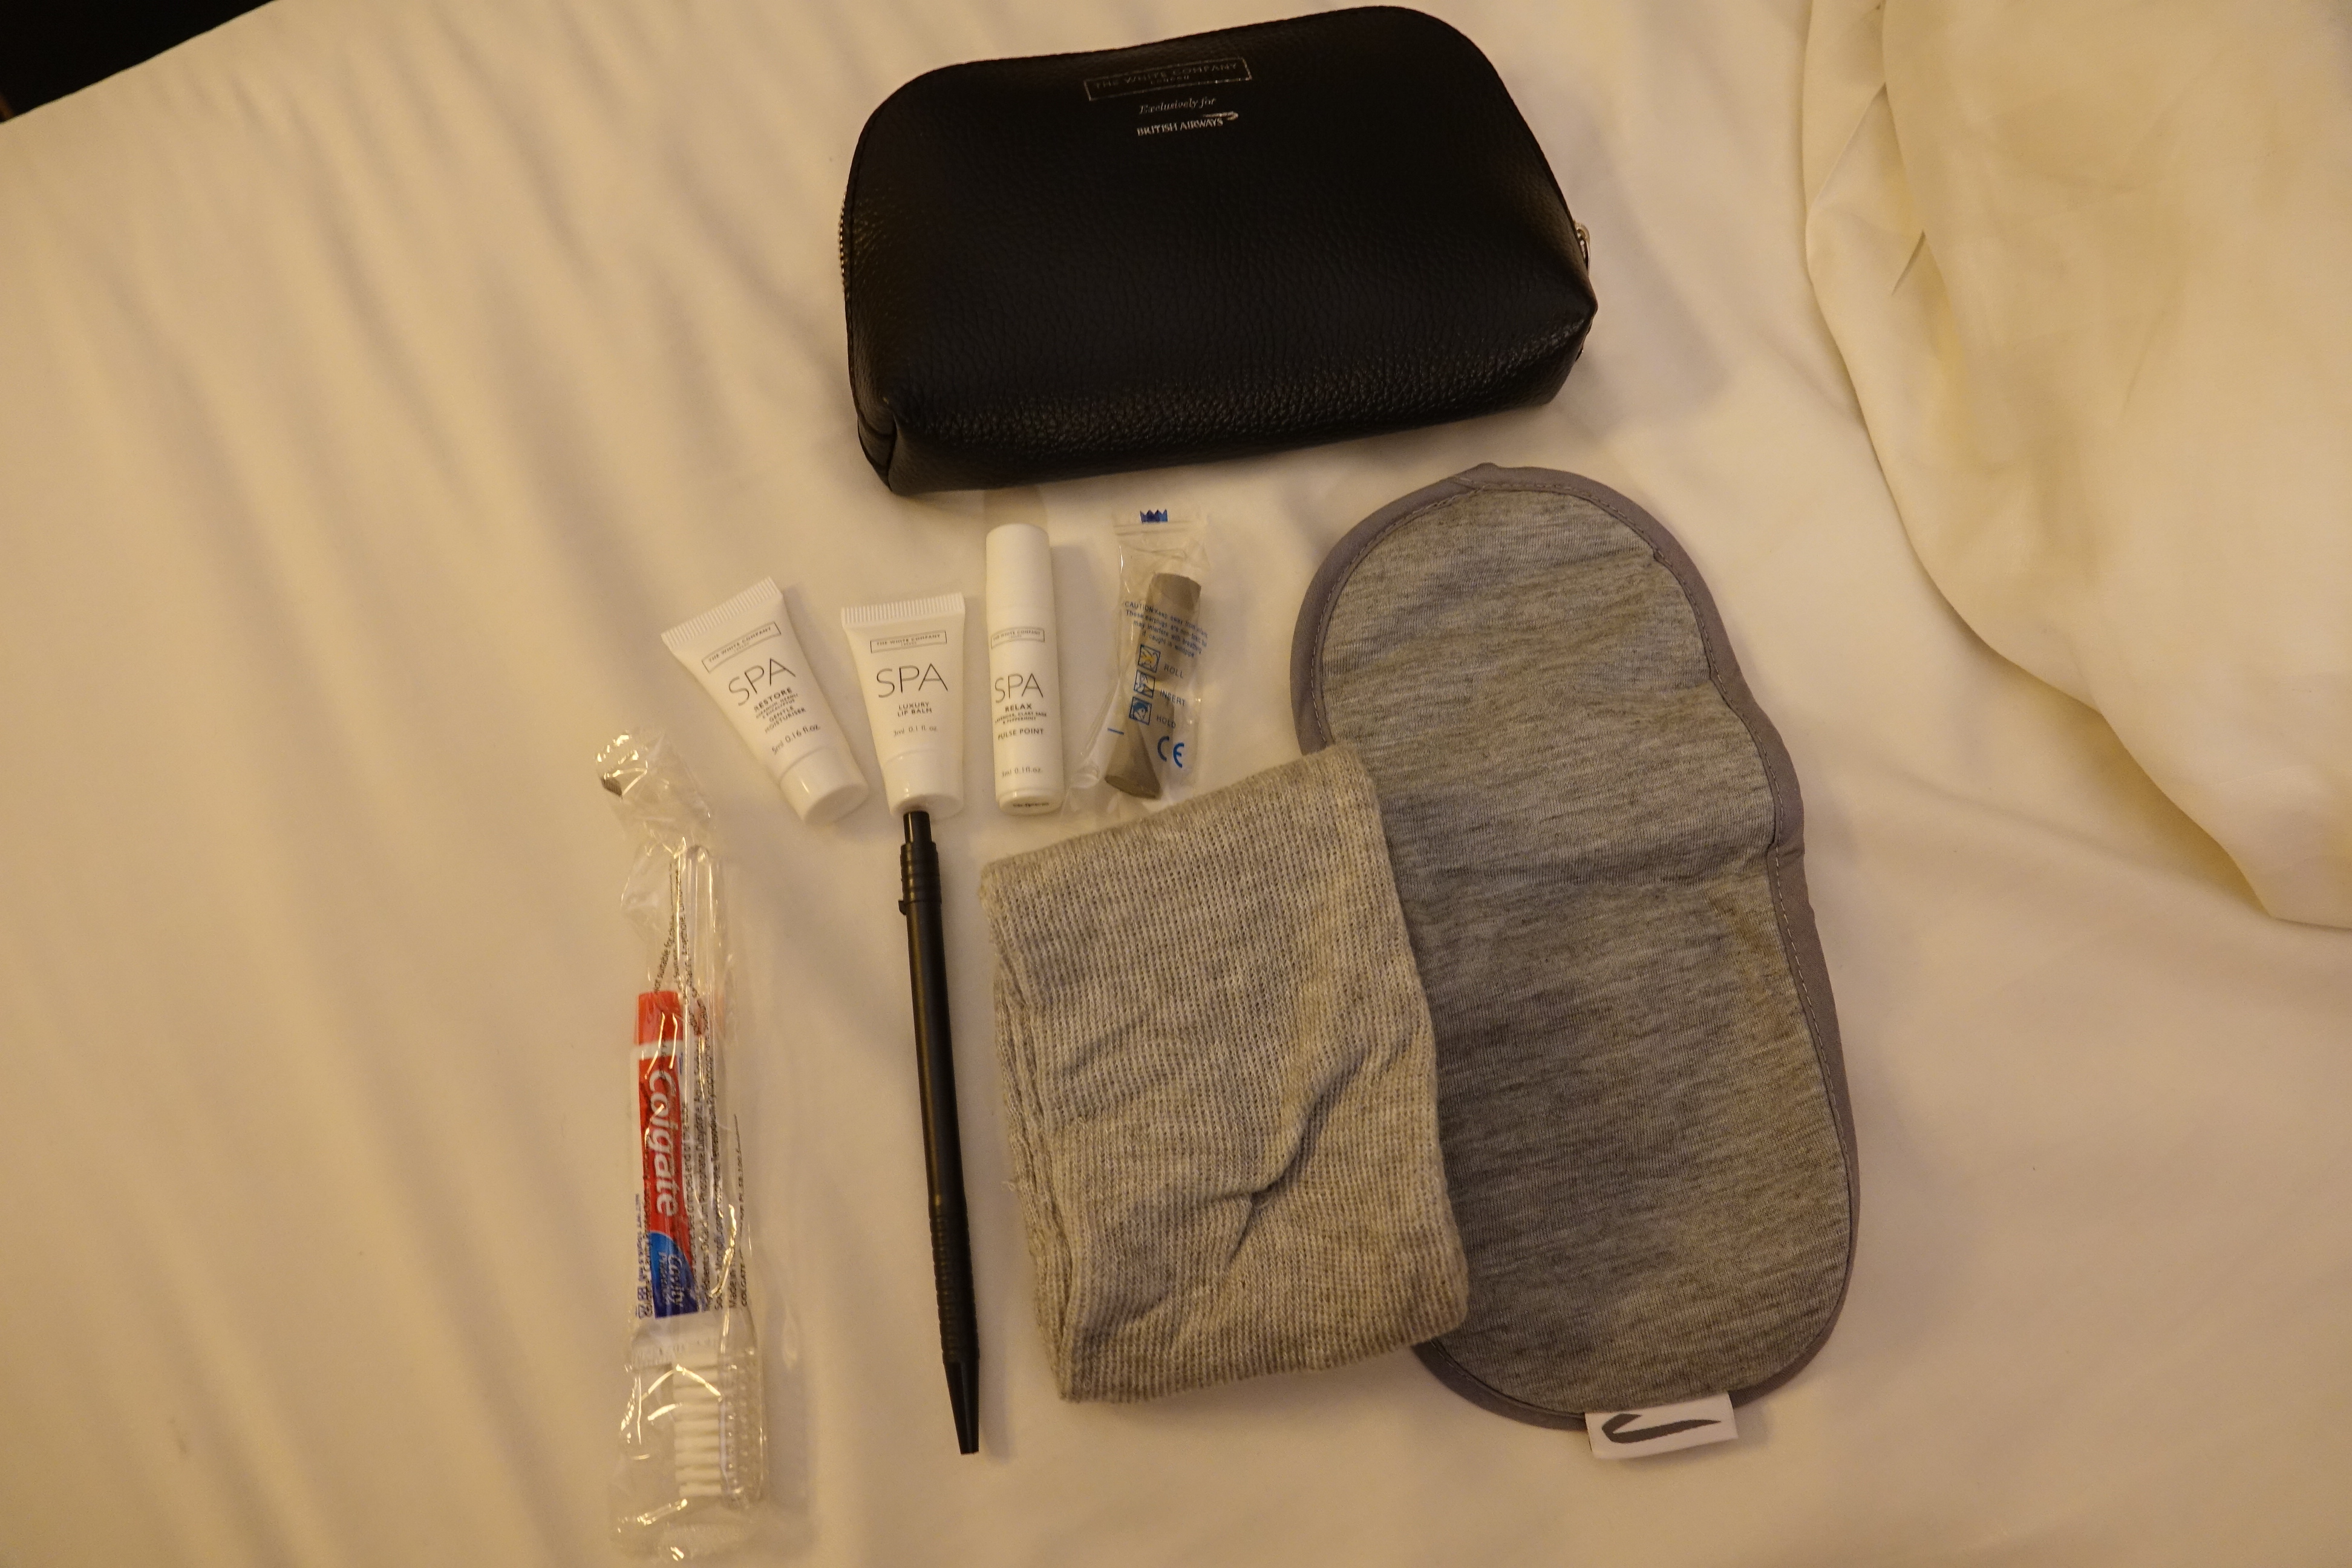 a bag with a black case and a black pen next to a black bag with toothpaste and a black object on it